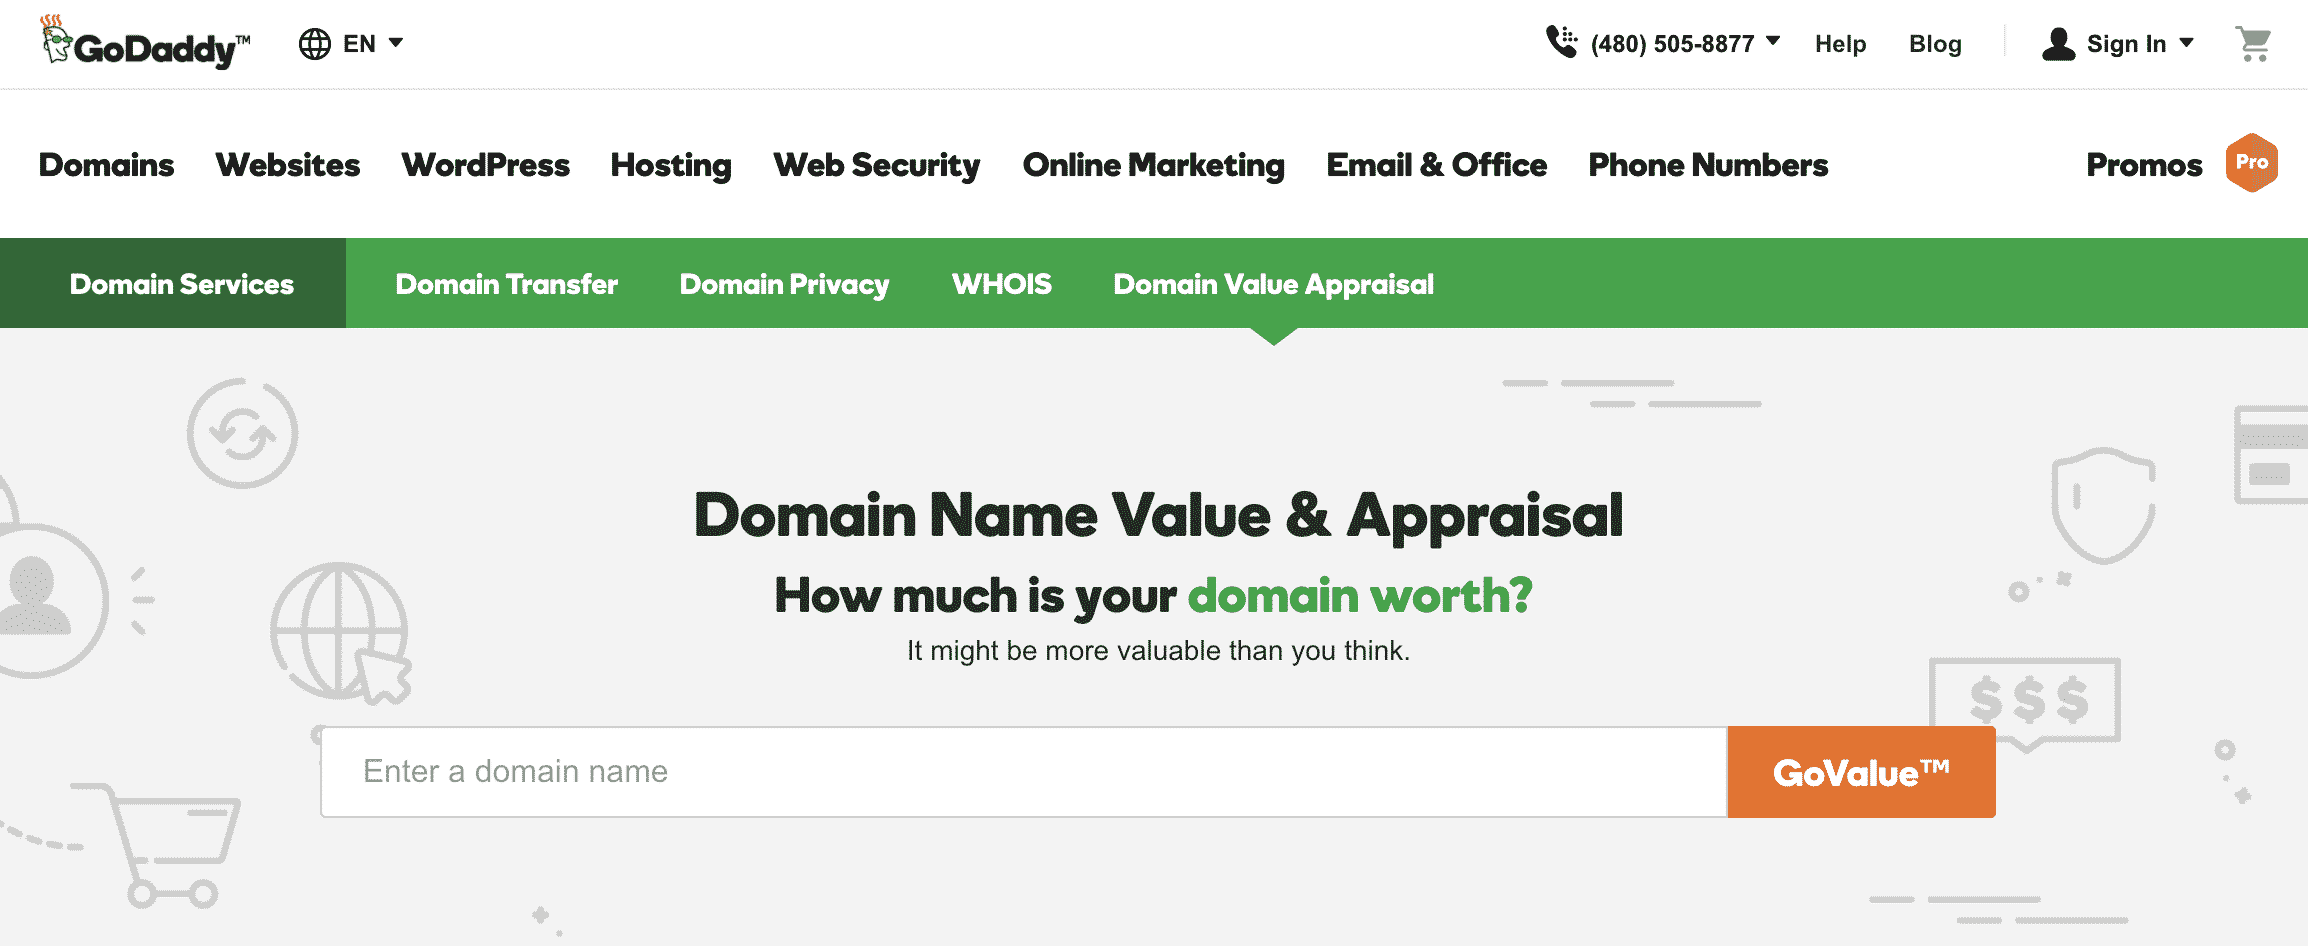 GoDaddy Domain Name Appraisal Tool